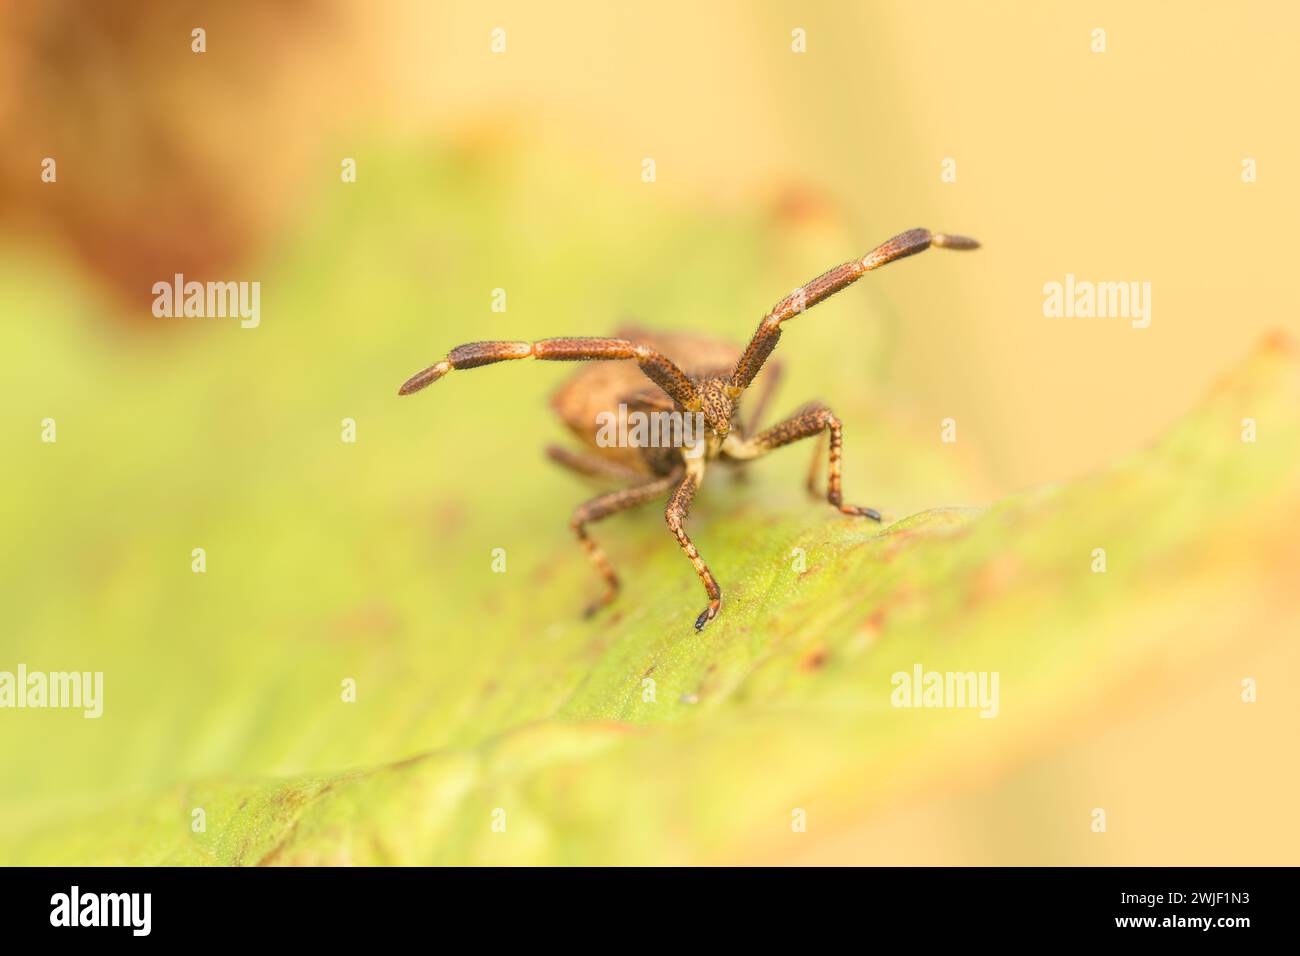 Closeup common, Dock bug (Coreus marginatus). Macro photo Dock bug in natural environment. Stock Photo